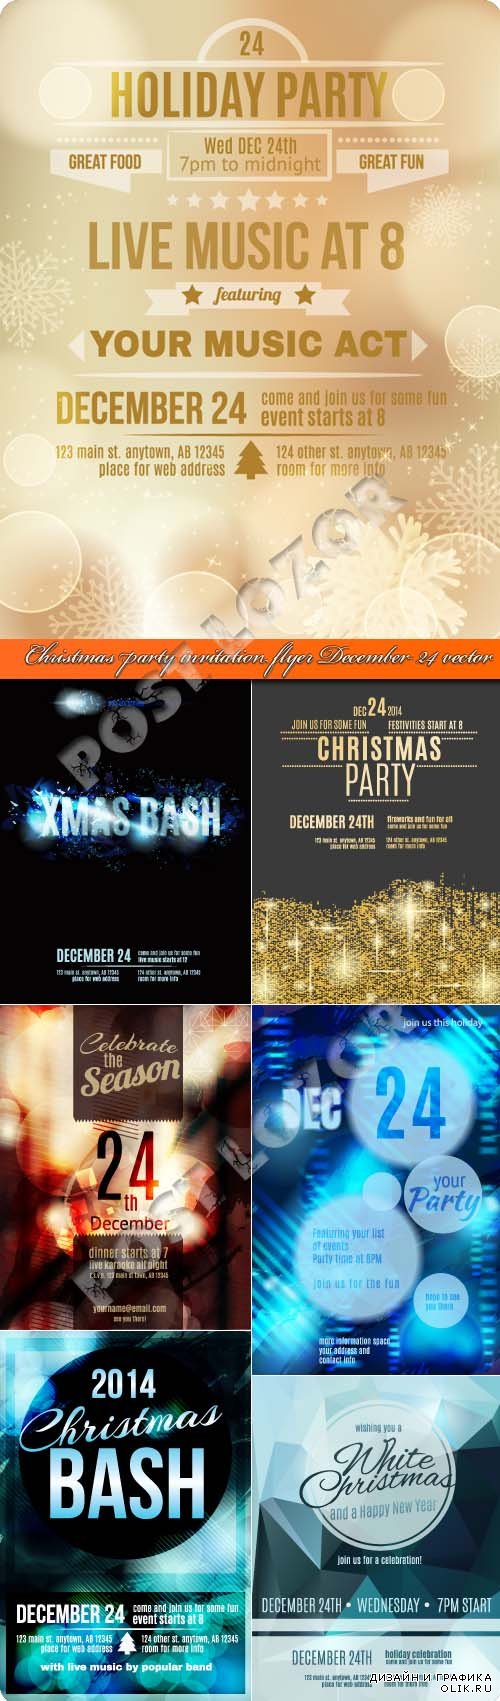 Christmas party invitation flyer December 24 vector